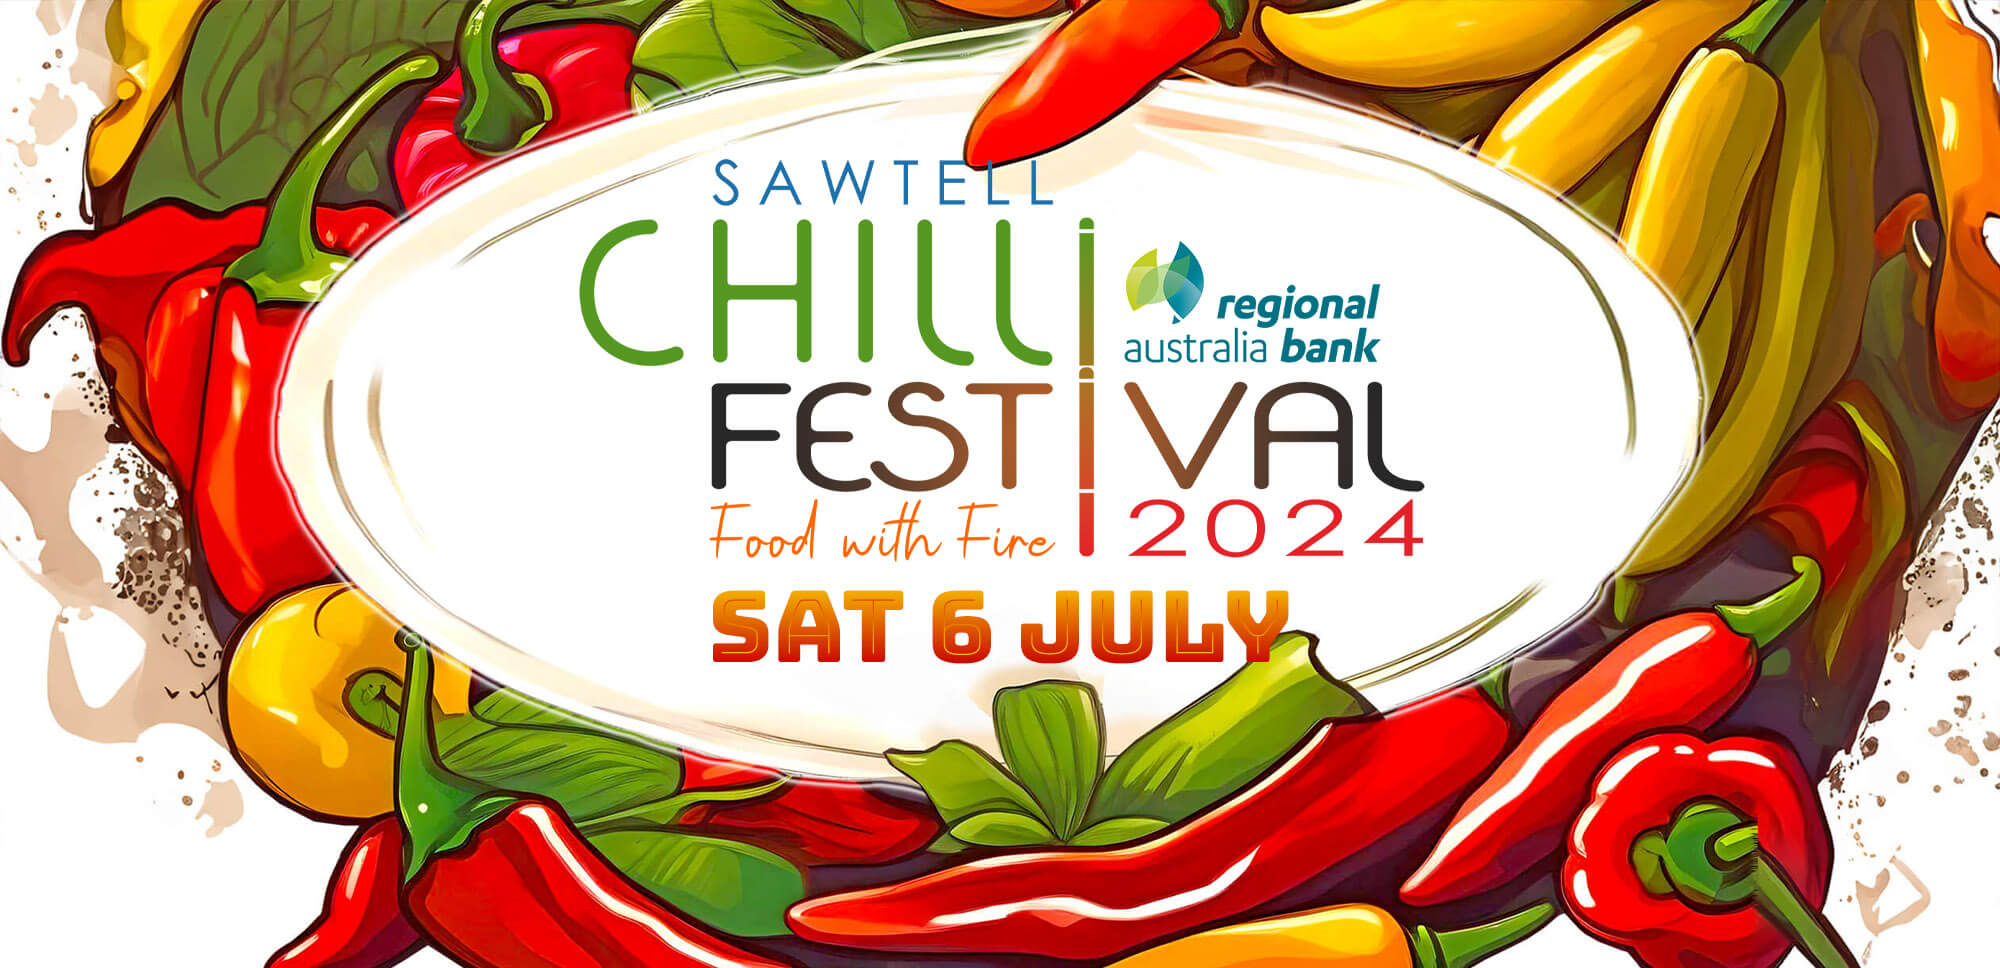 Sawtell Chilli Festival 2024